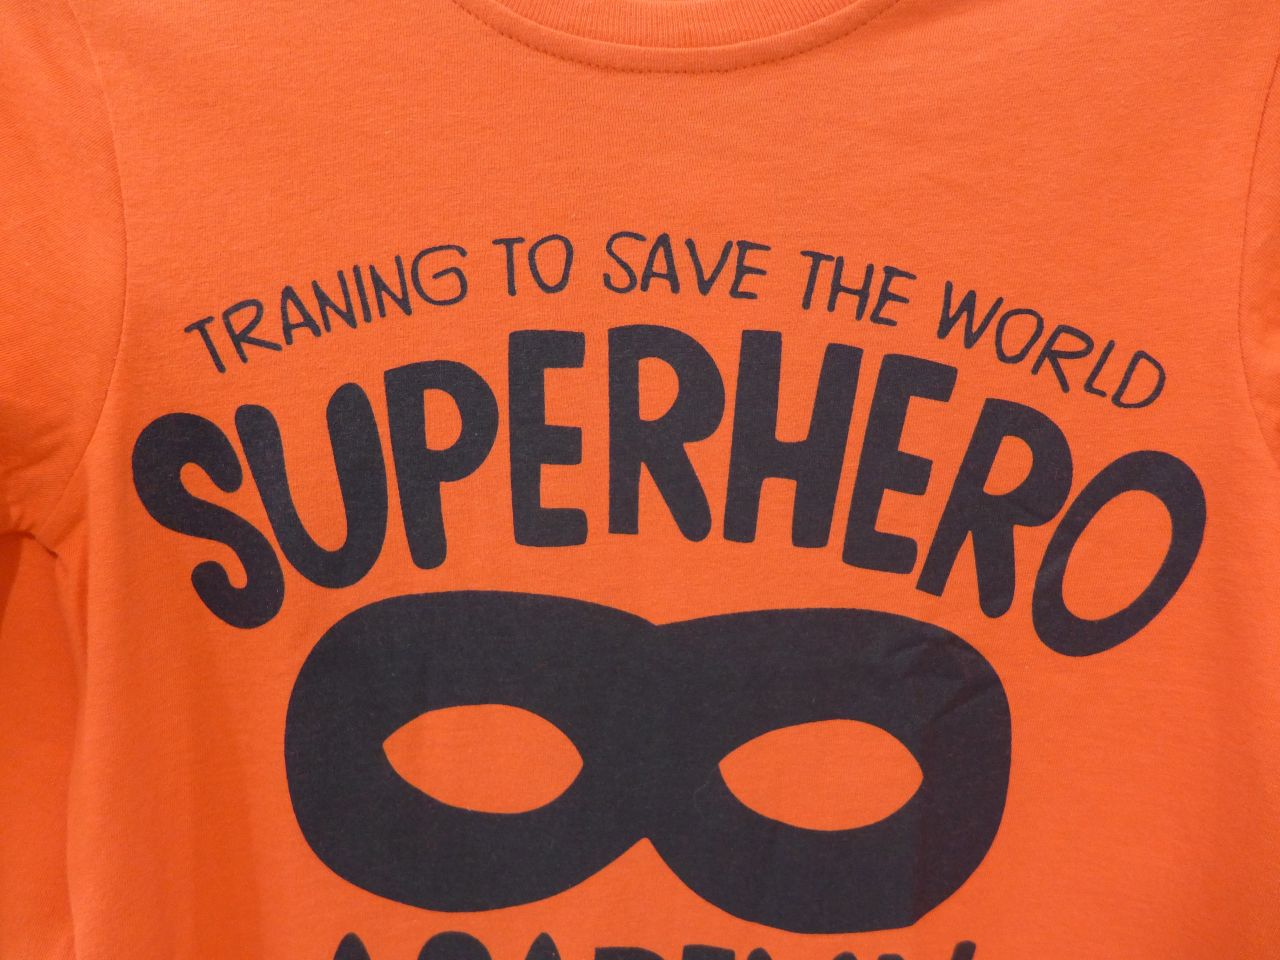 Traning to save the World. Superhero.